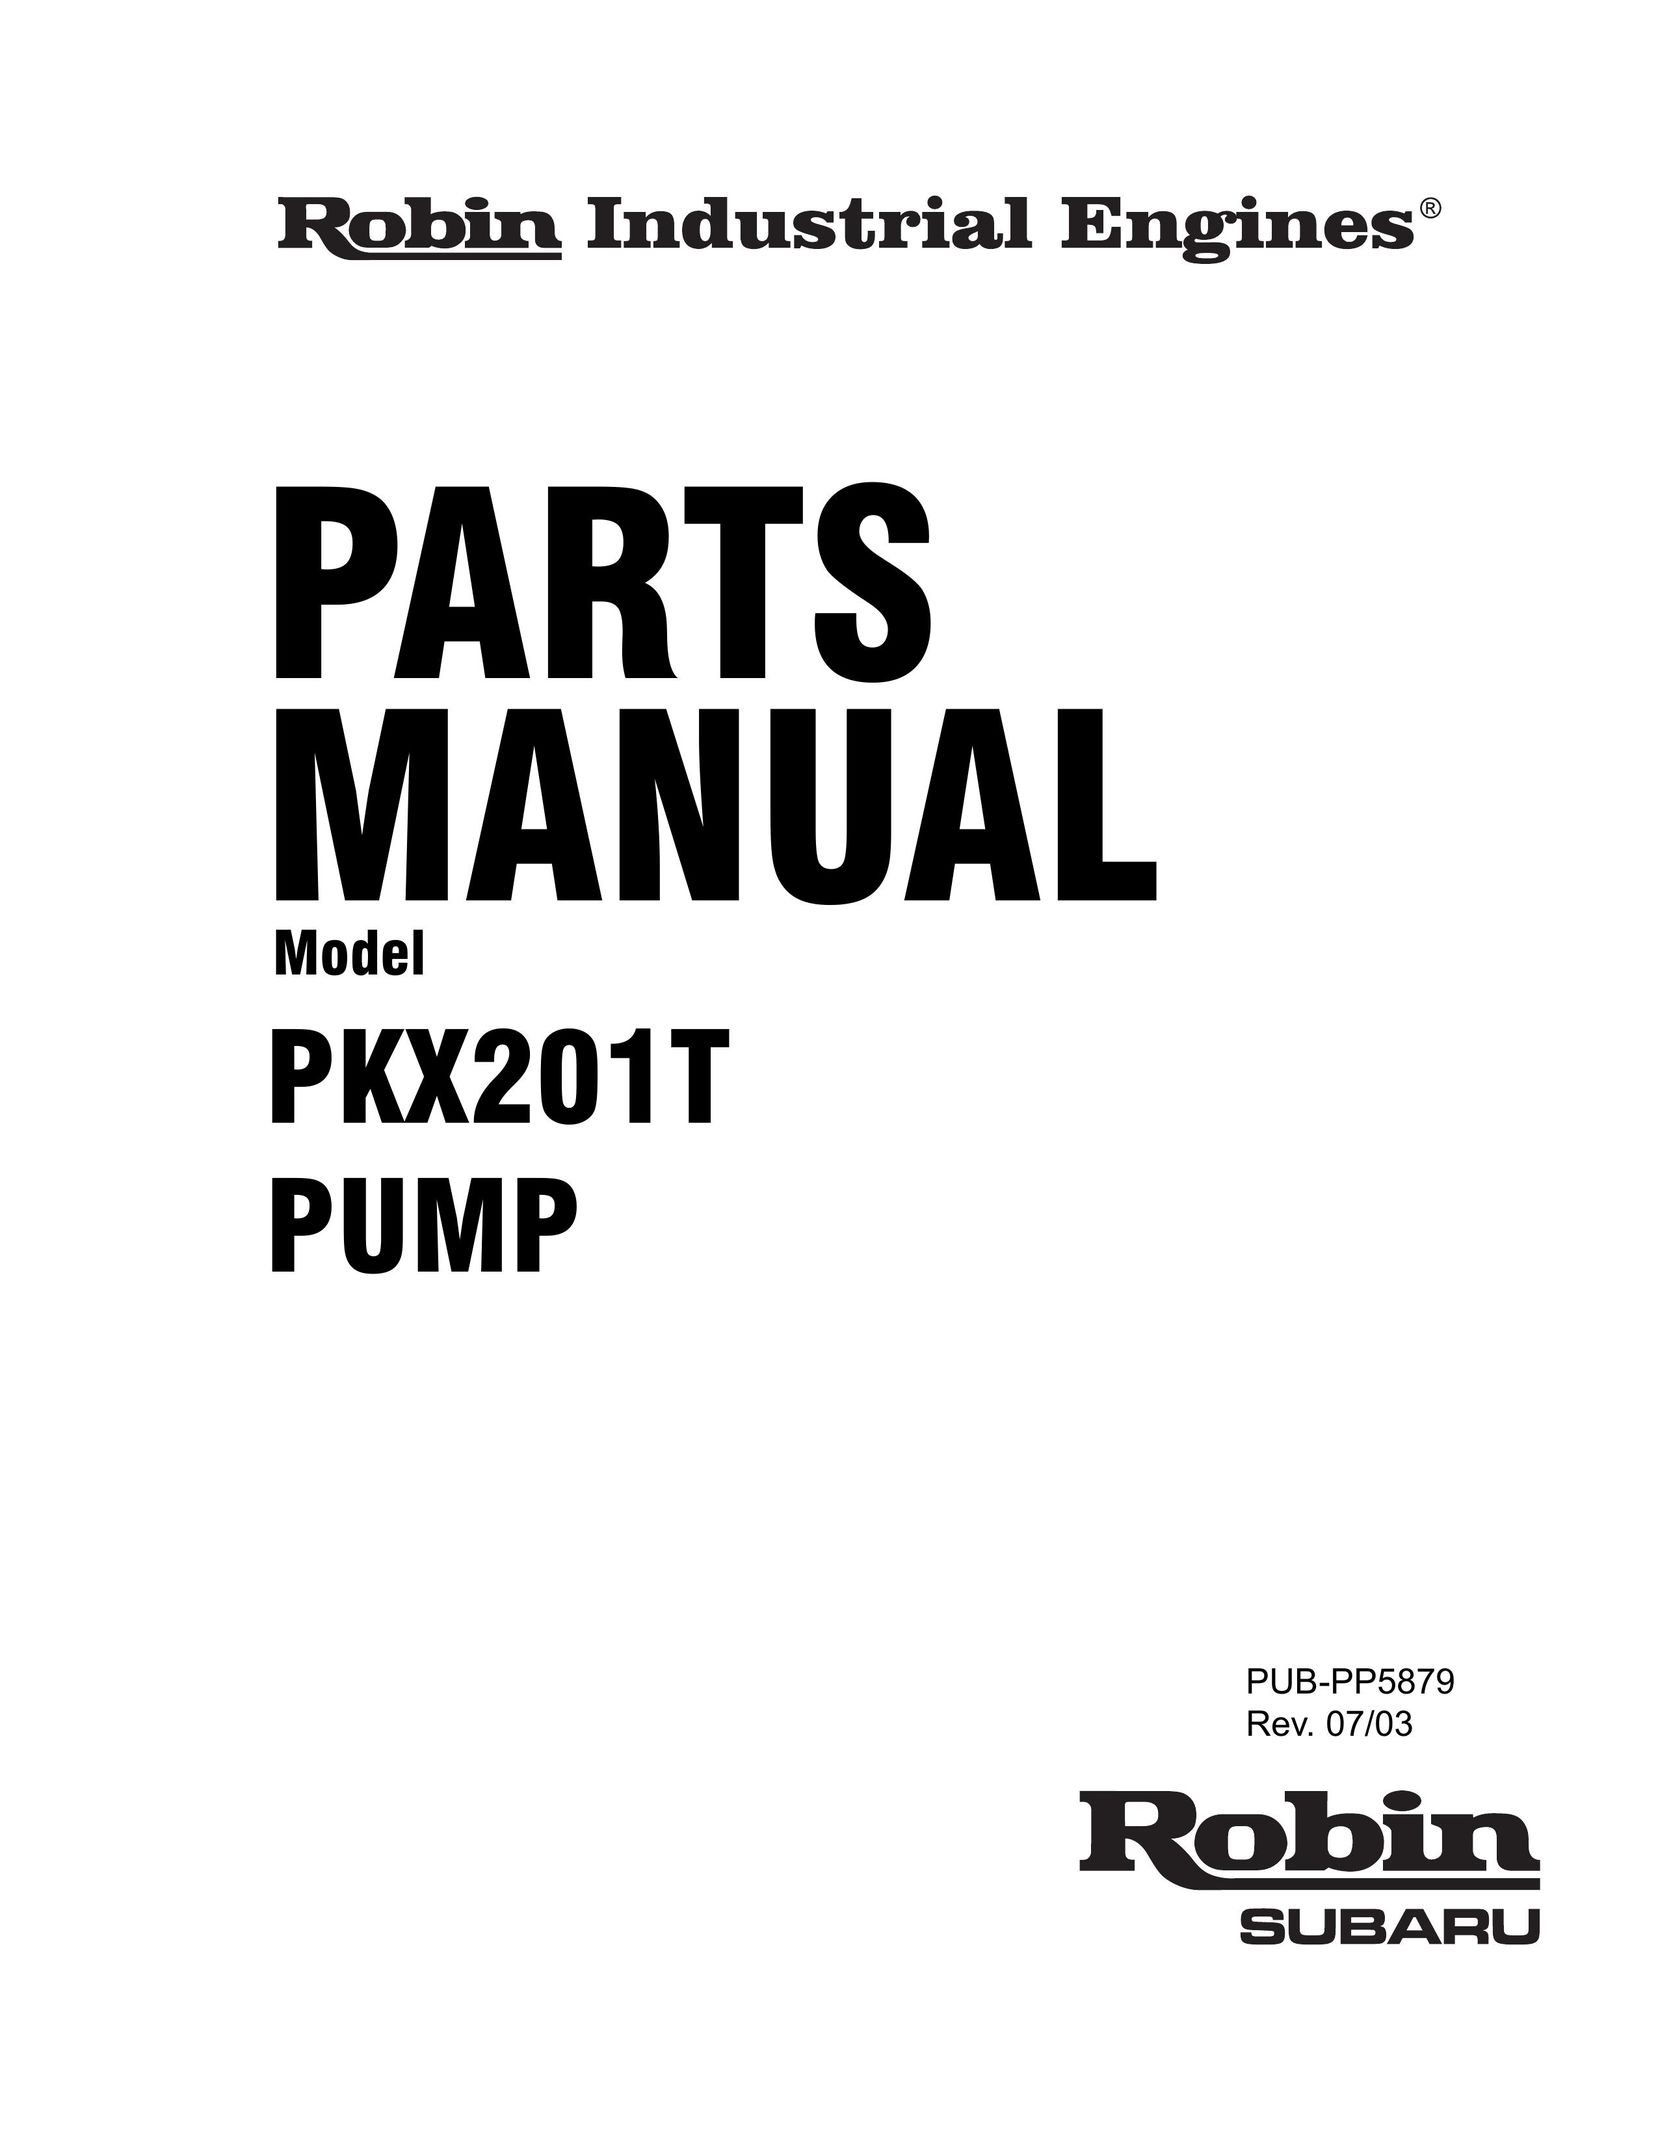 Subaru Robin Power Products PKX201T Water Pump User Manual